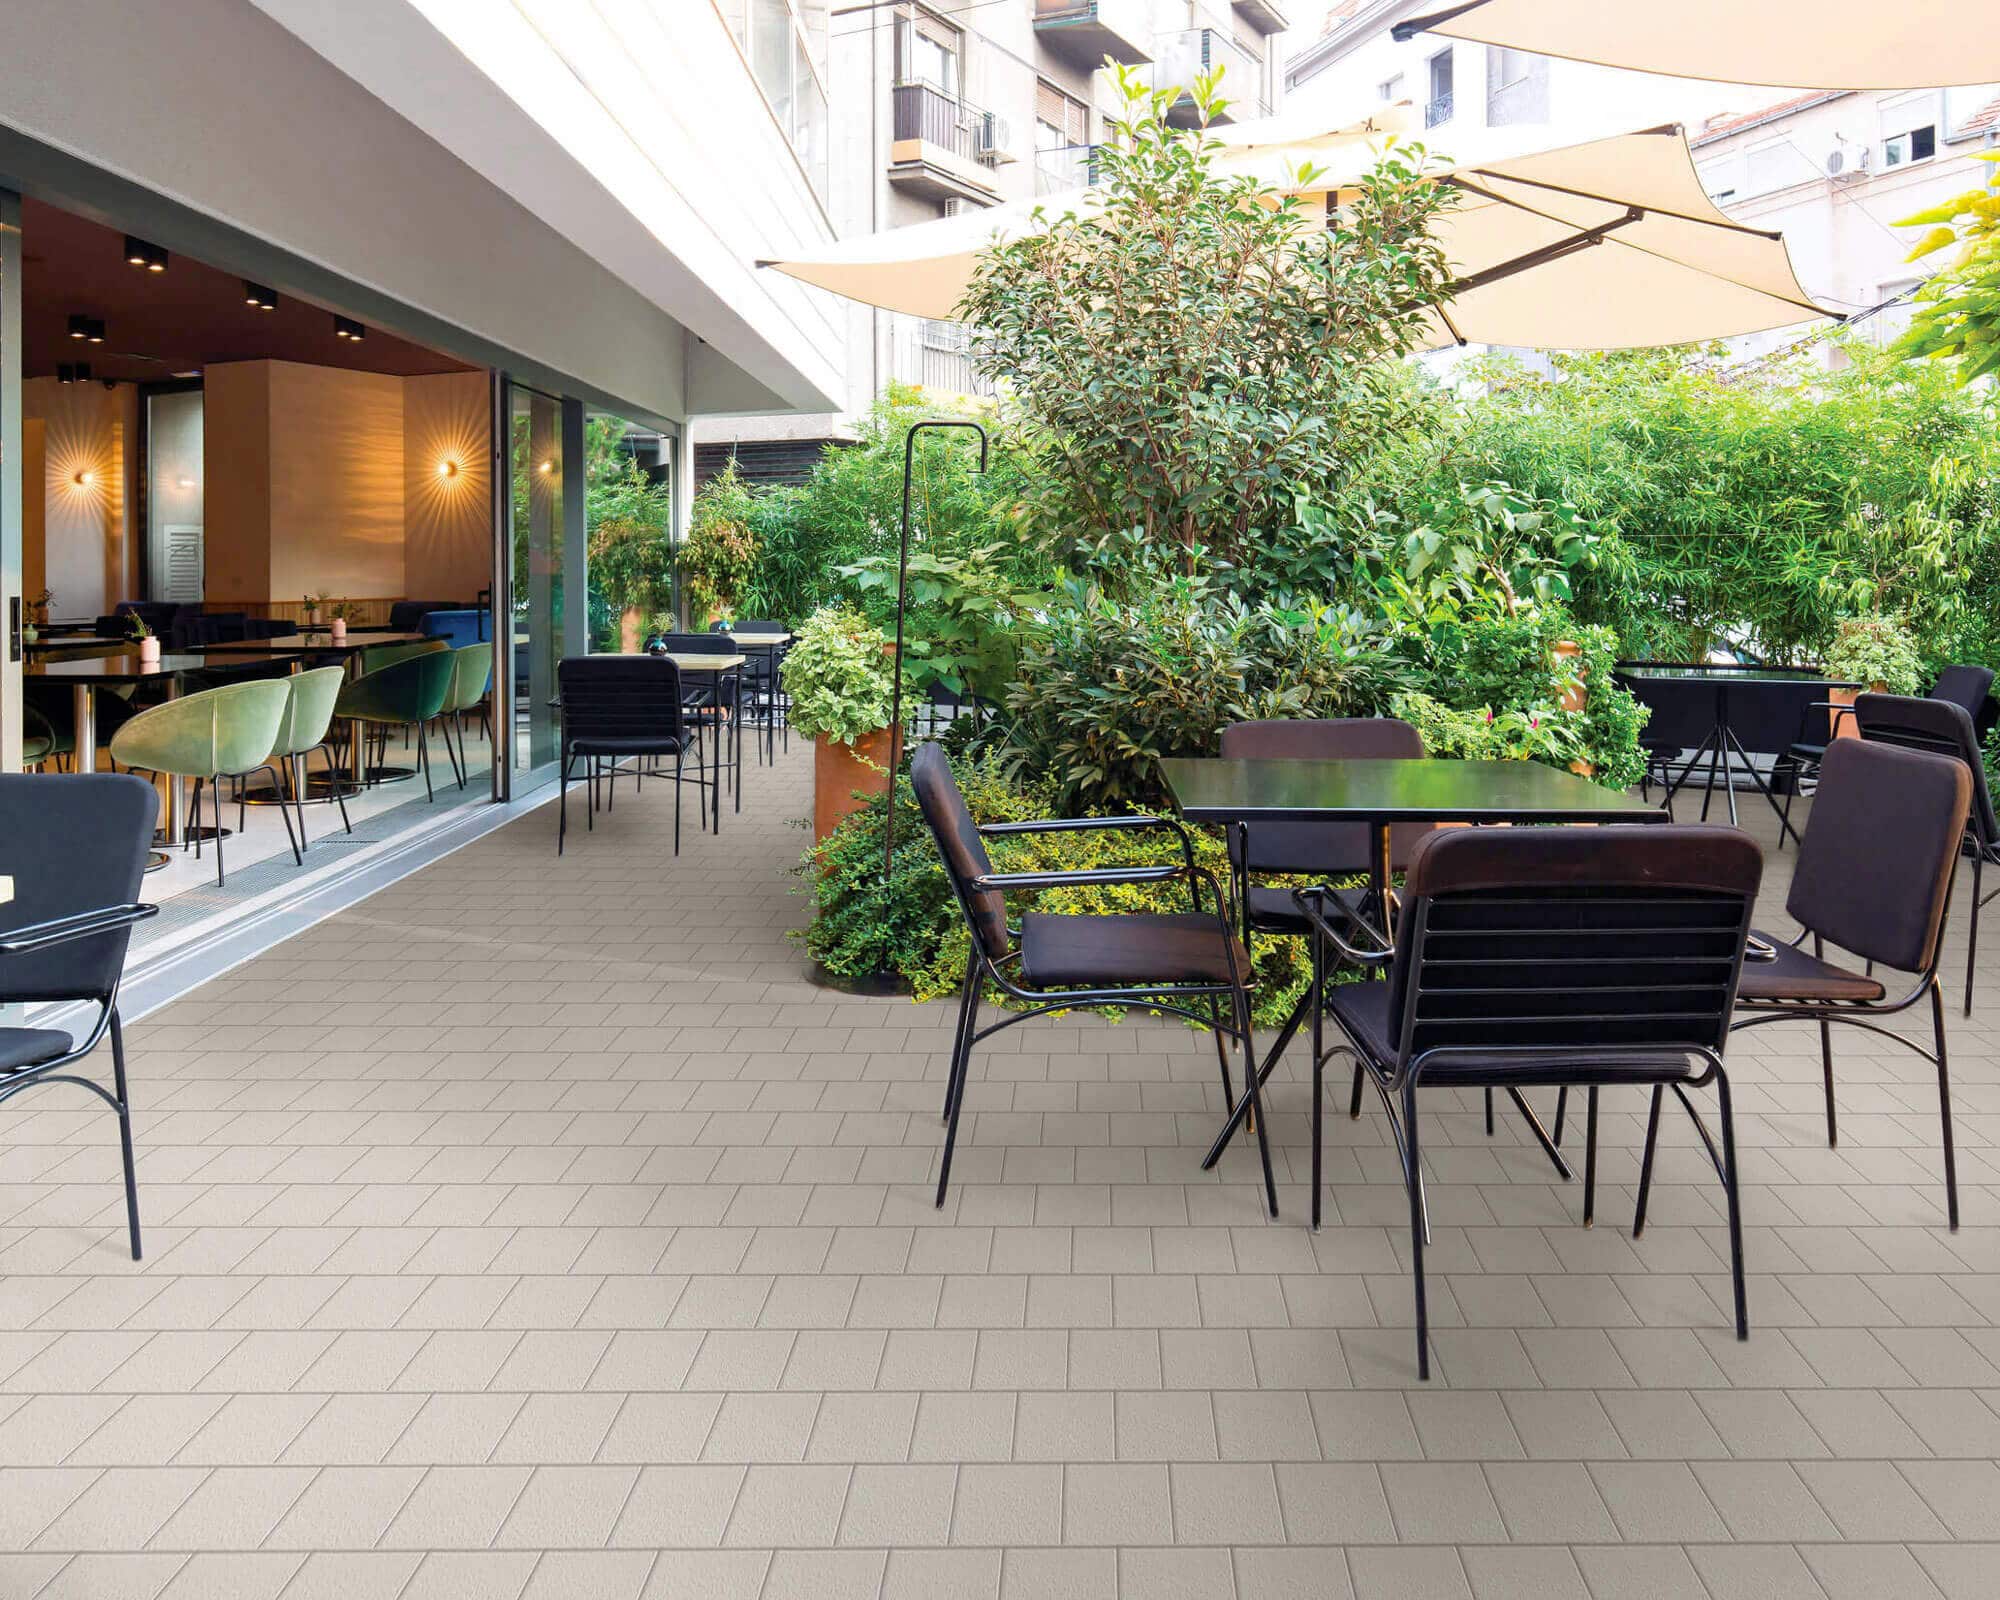 Restaurant exterior with staggered grid (Brickwork Square) floor tile Pattern